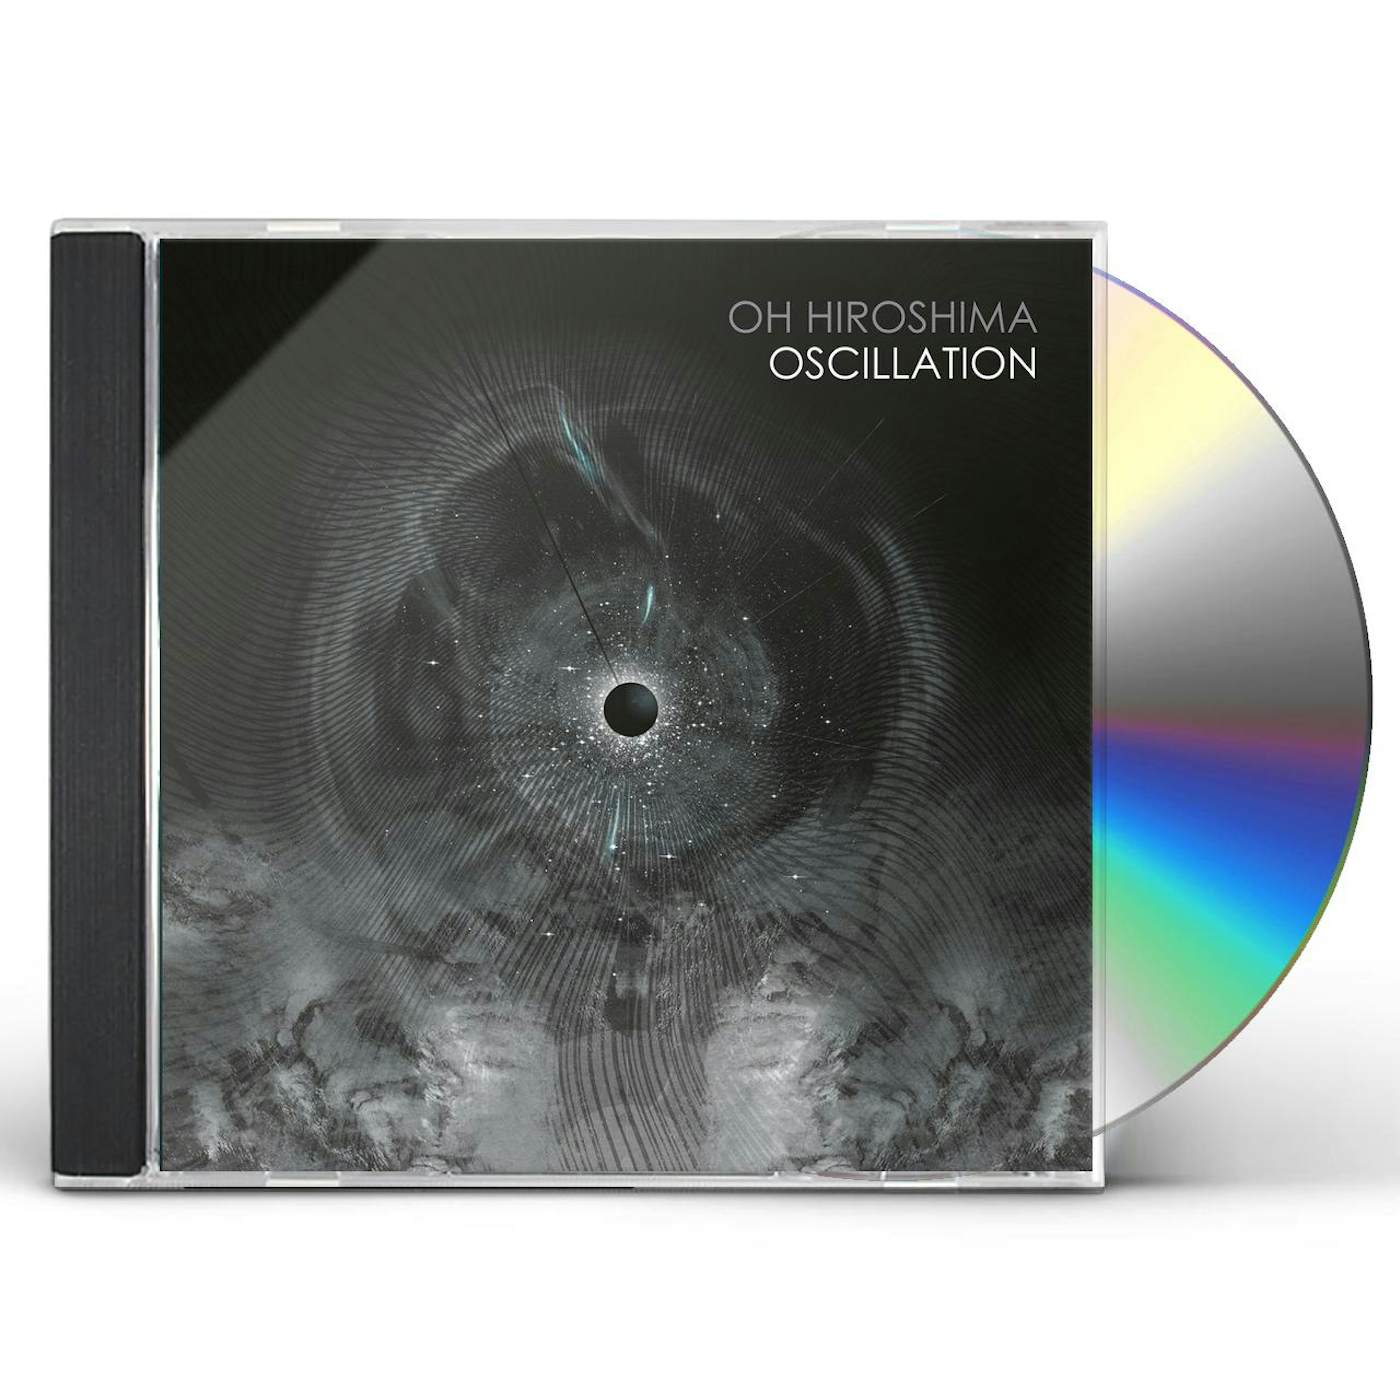 Oh Hiroshima OSCILLATION CD